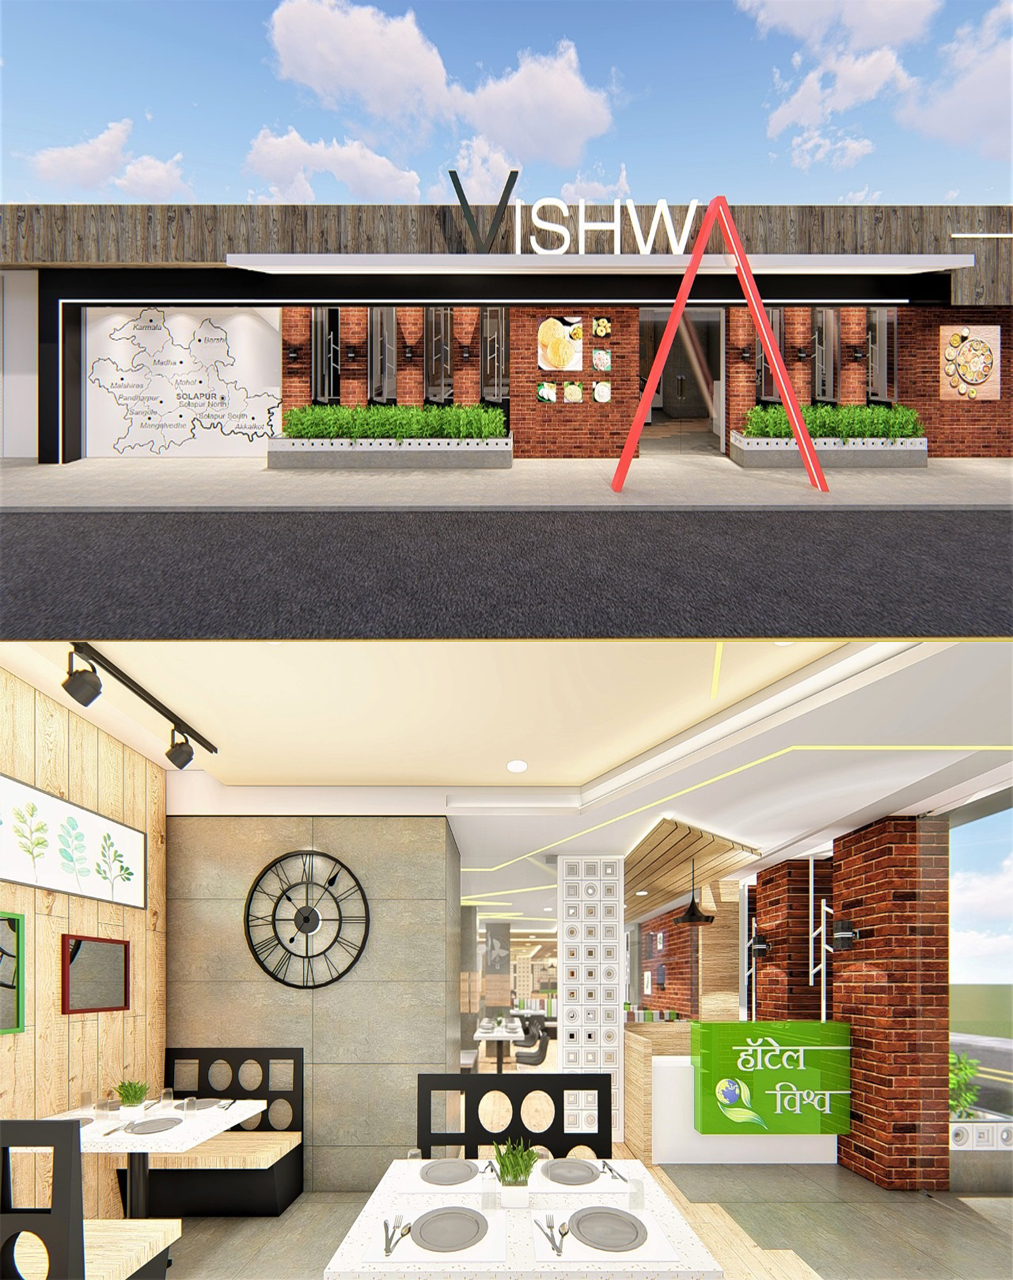 HOTEL VISHWA| SolapurMall.com